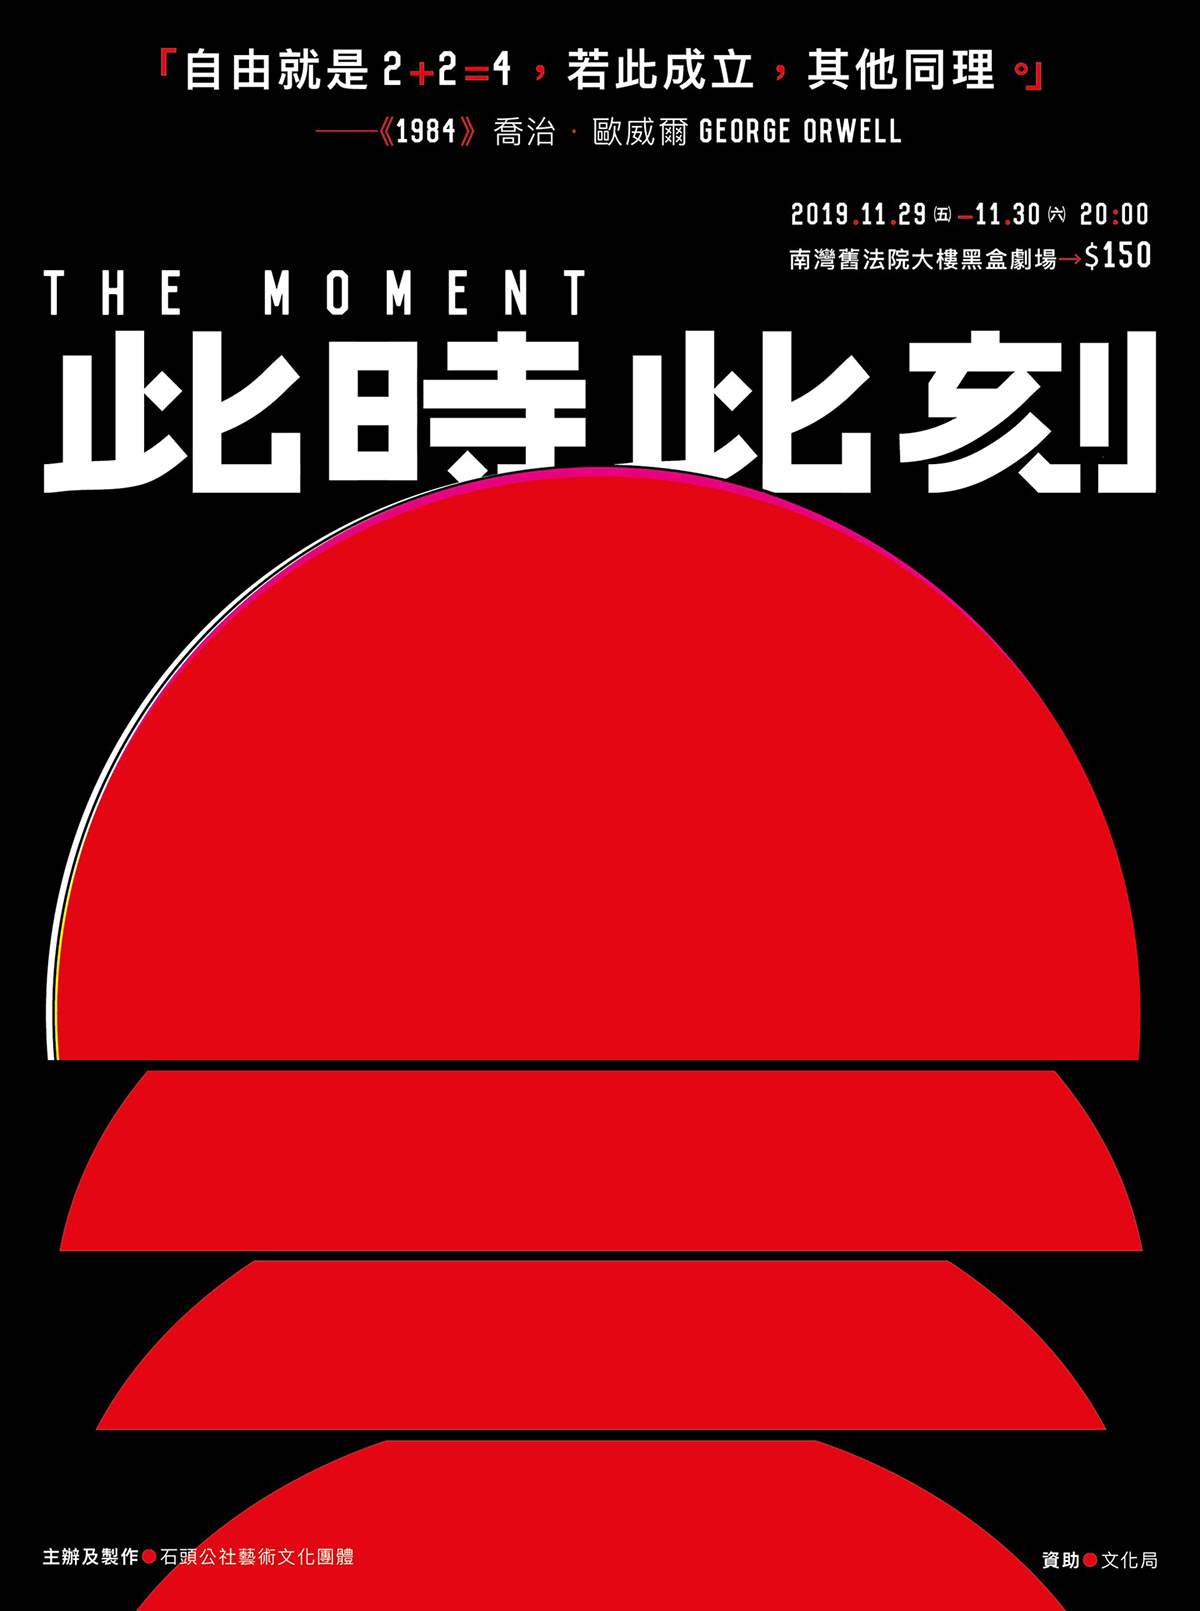 Theatre macau china recognition tyranny politics poster Website preformance monitor